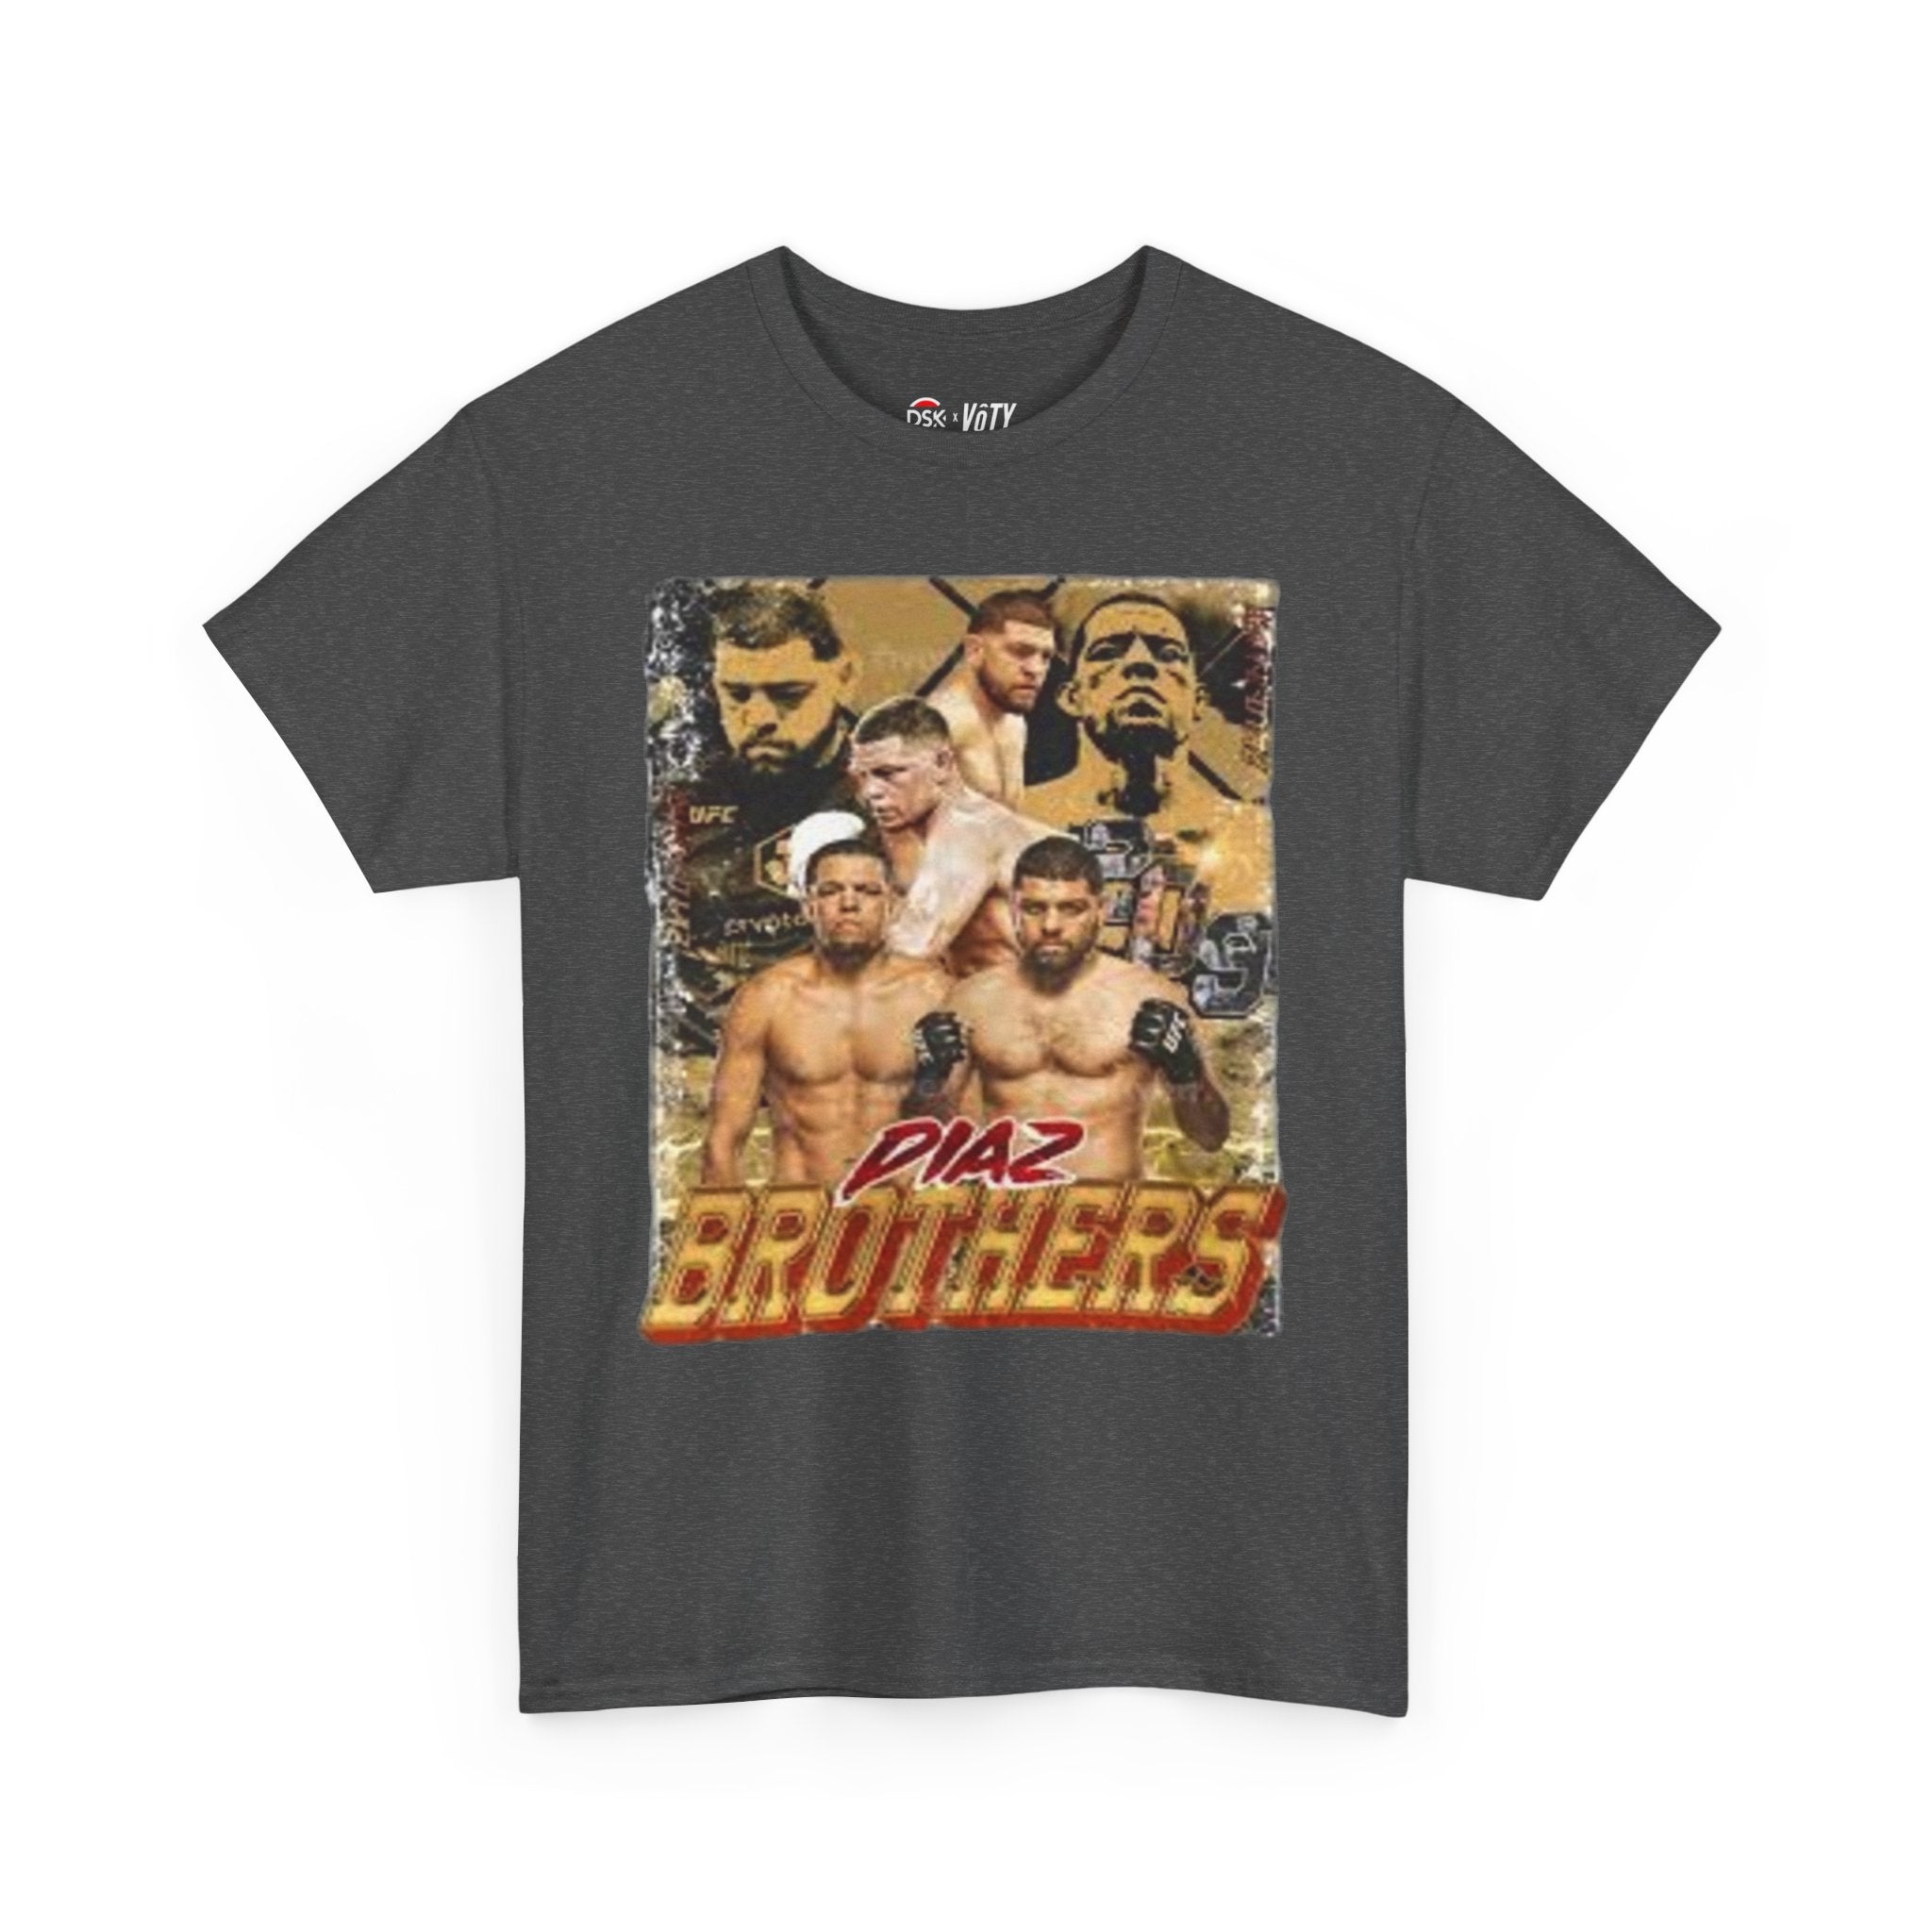 Diaz Brothers T-Shirt